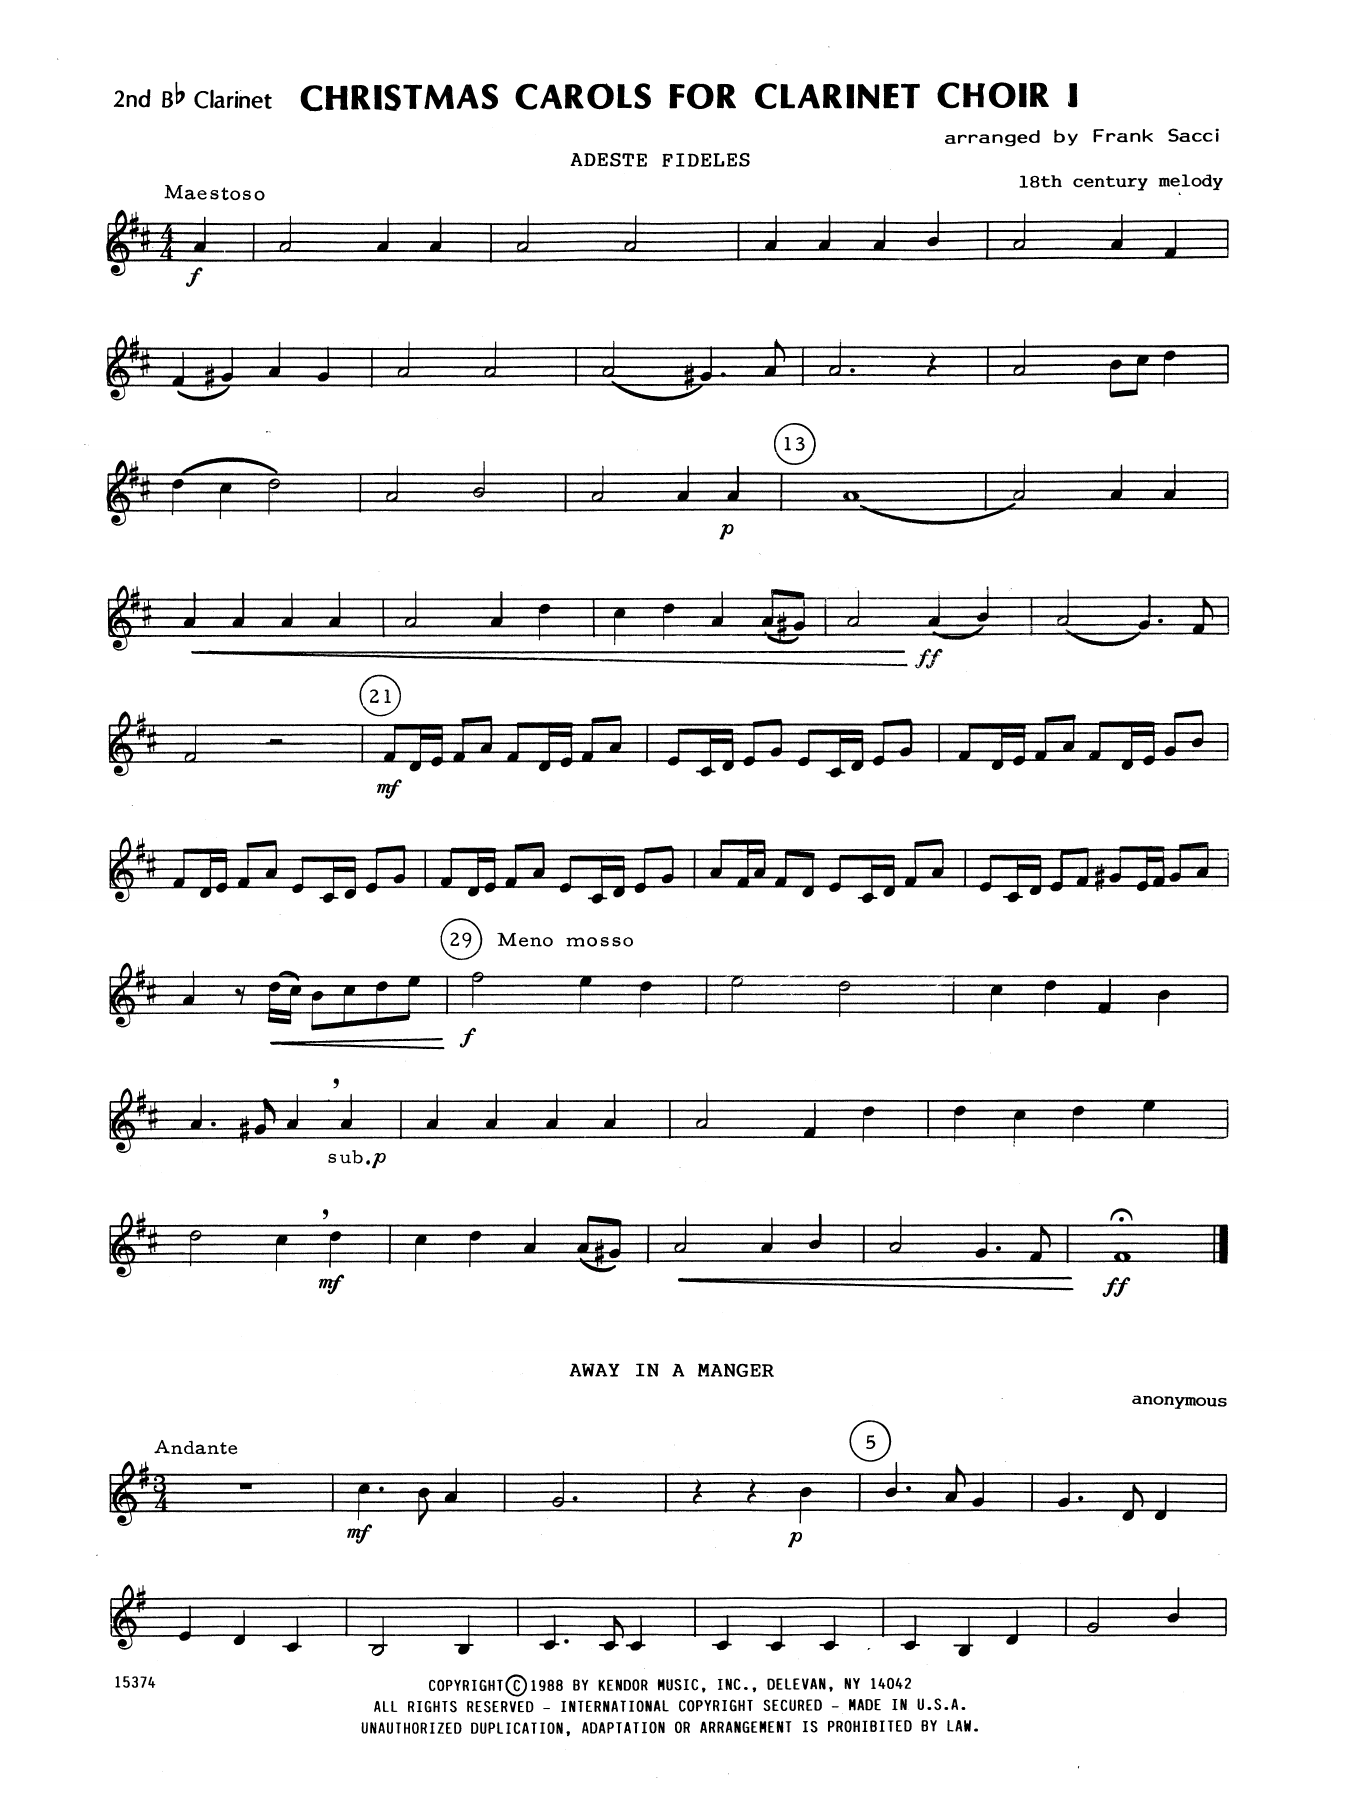 Download Frank Sacci Christmas Carols For Clarinet Choir I - Sheet Music